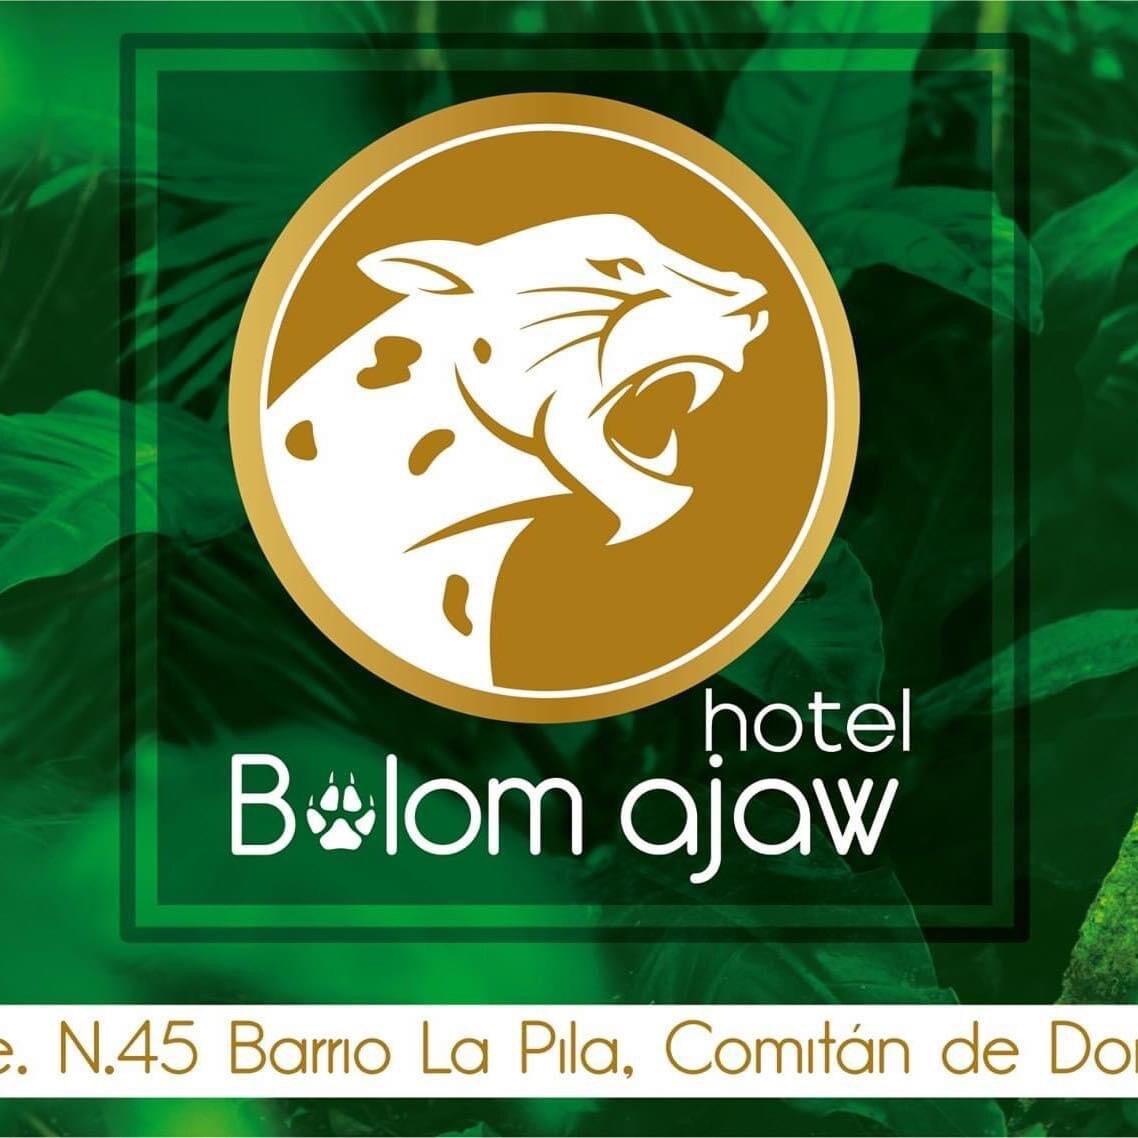 Hotel Bolom Ajaw